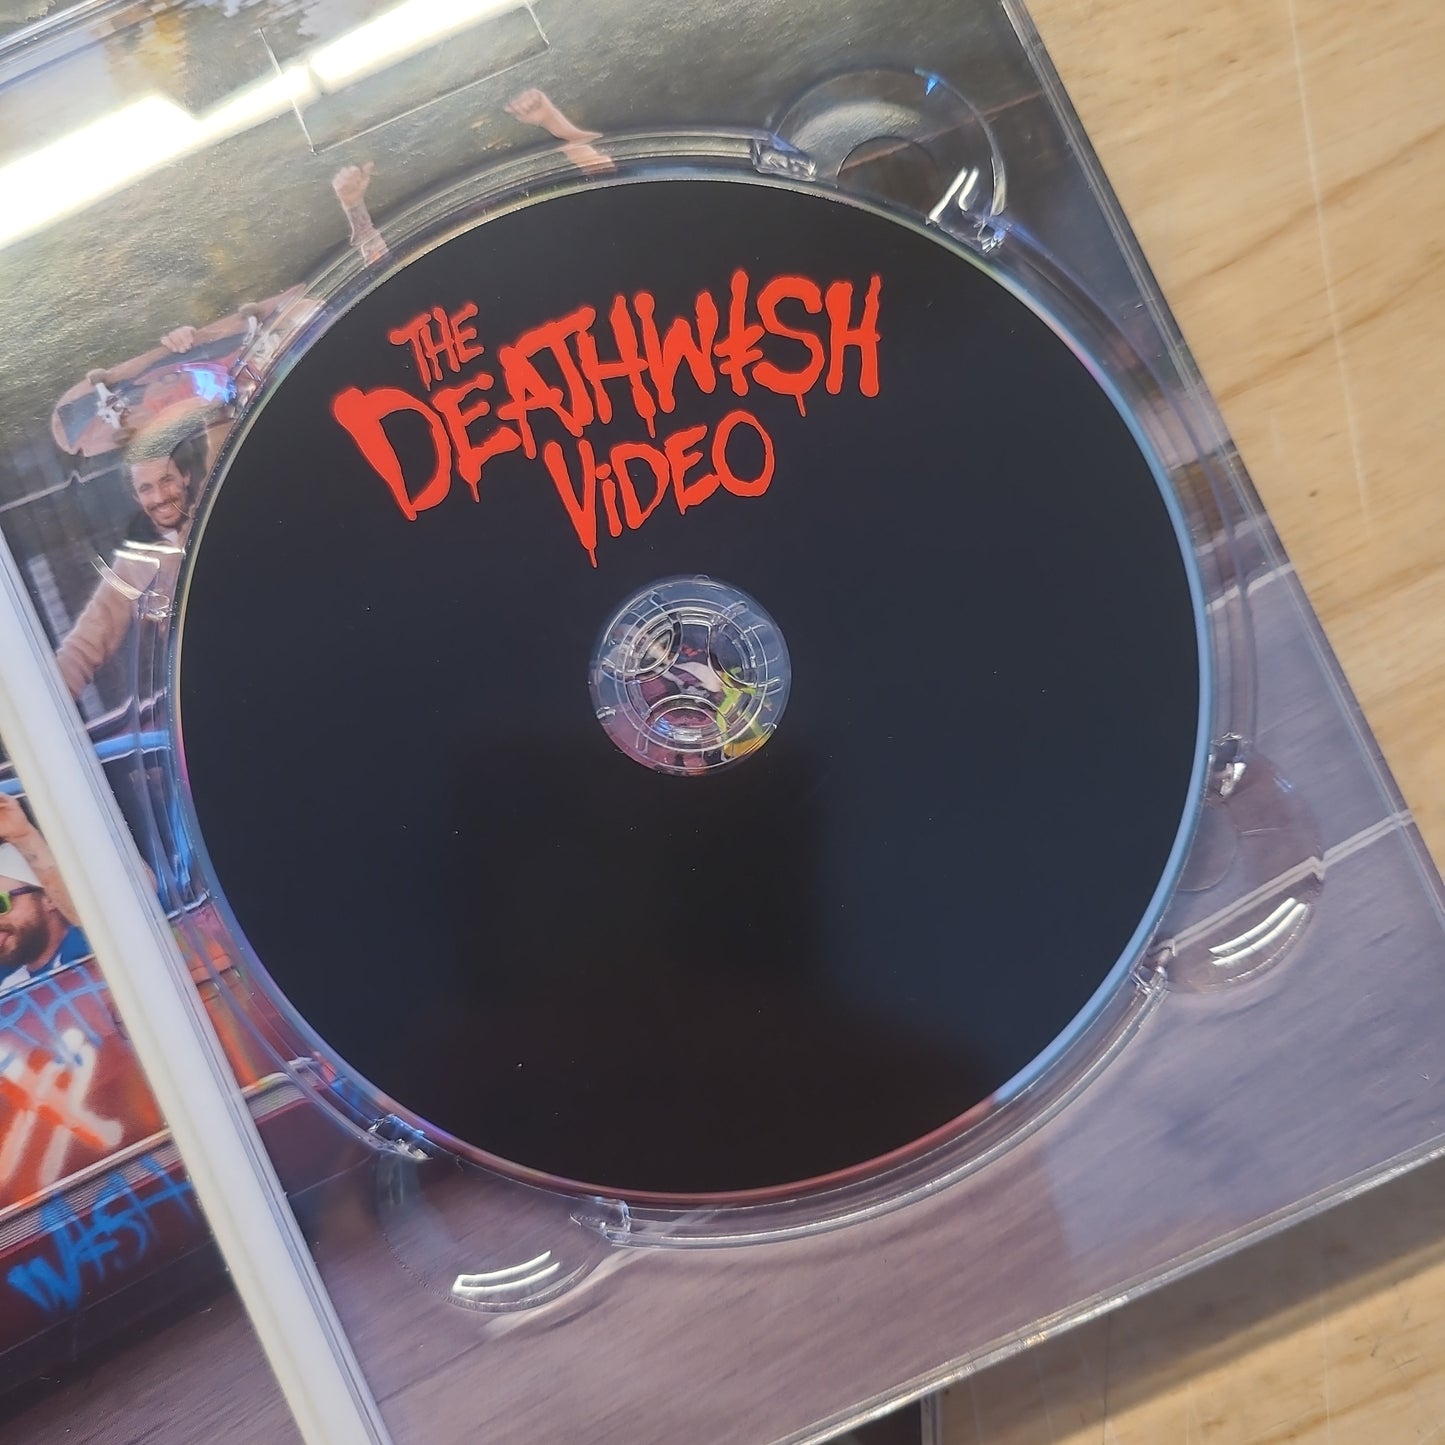 The Deathwish Video